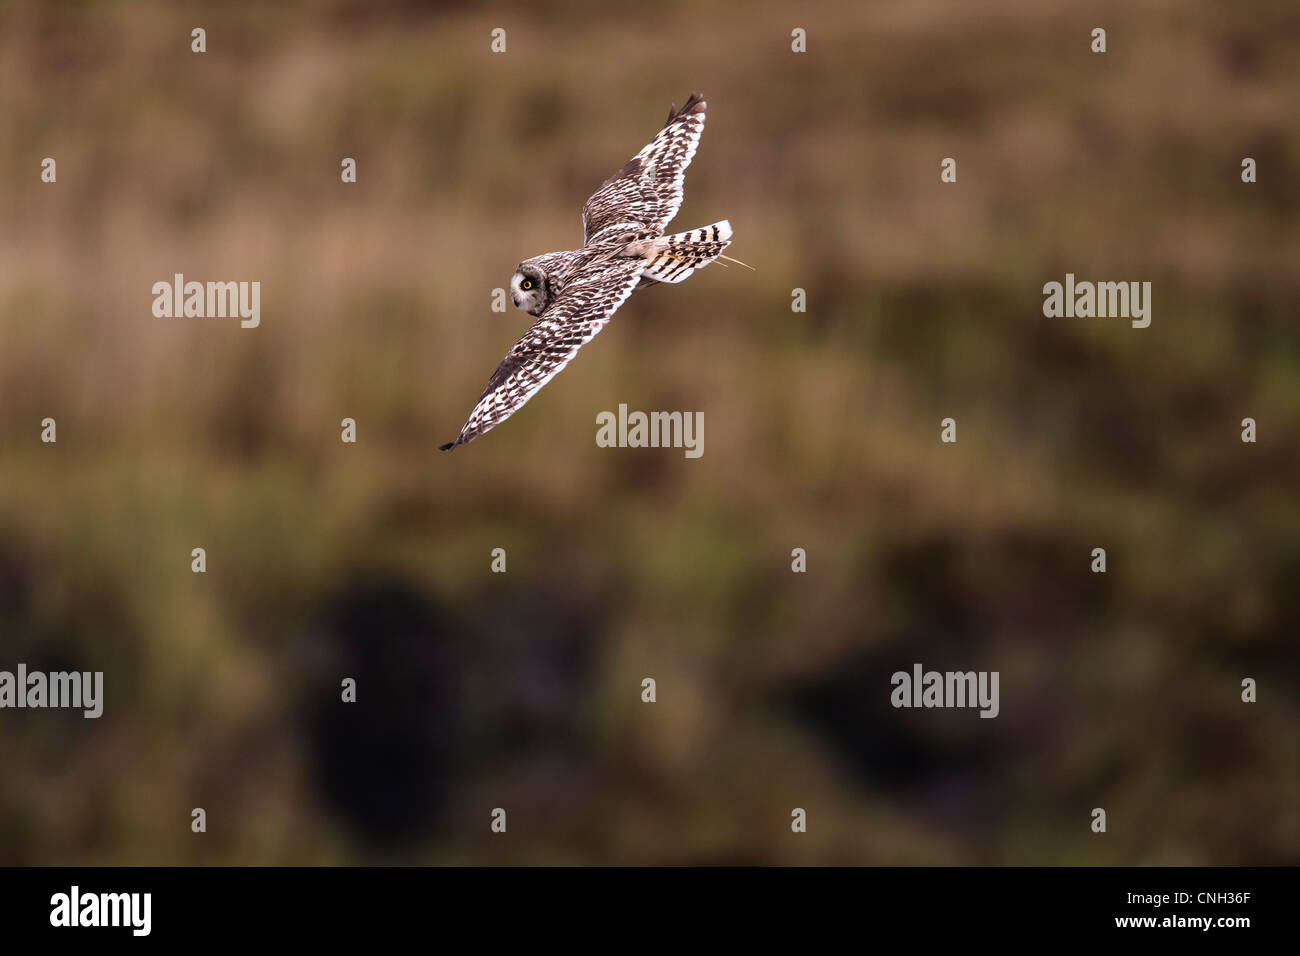 Kurze eared Eule im Flug über Heide in North Uist Schottland UK Stockfoto